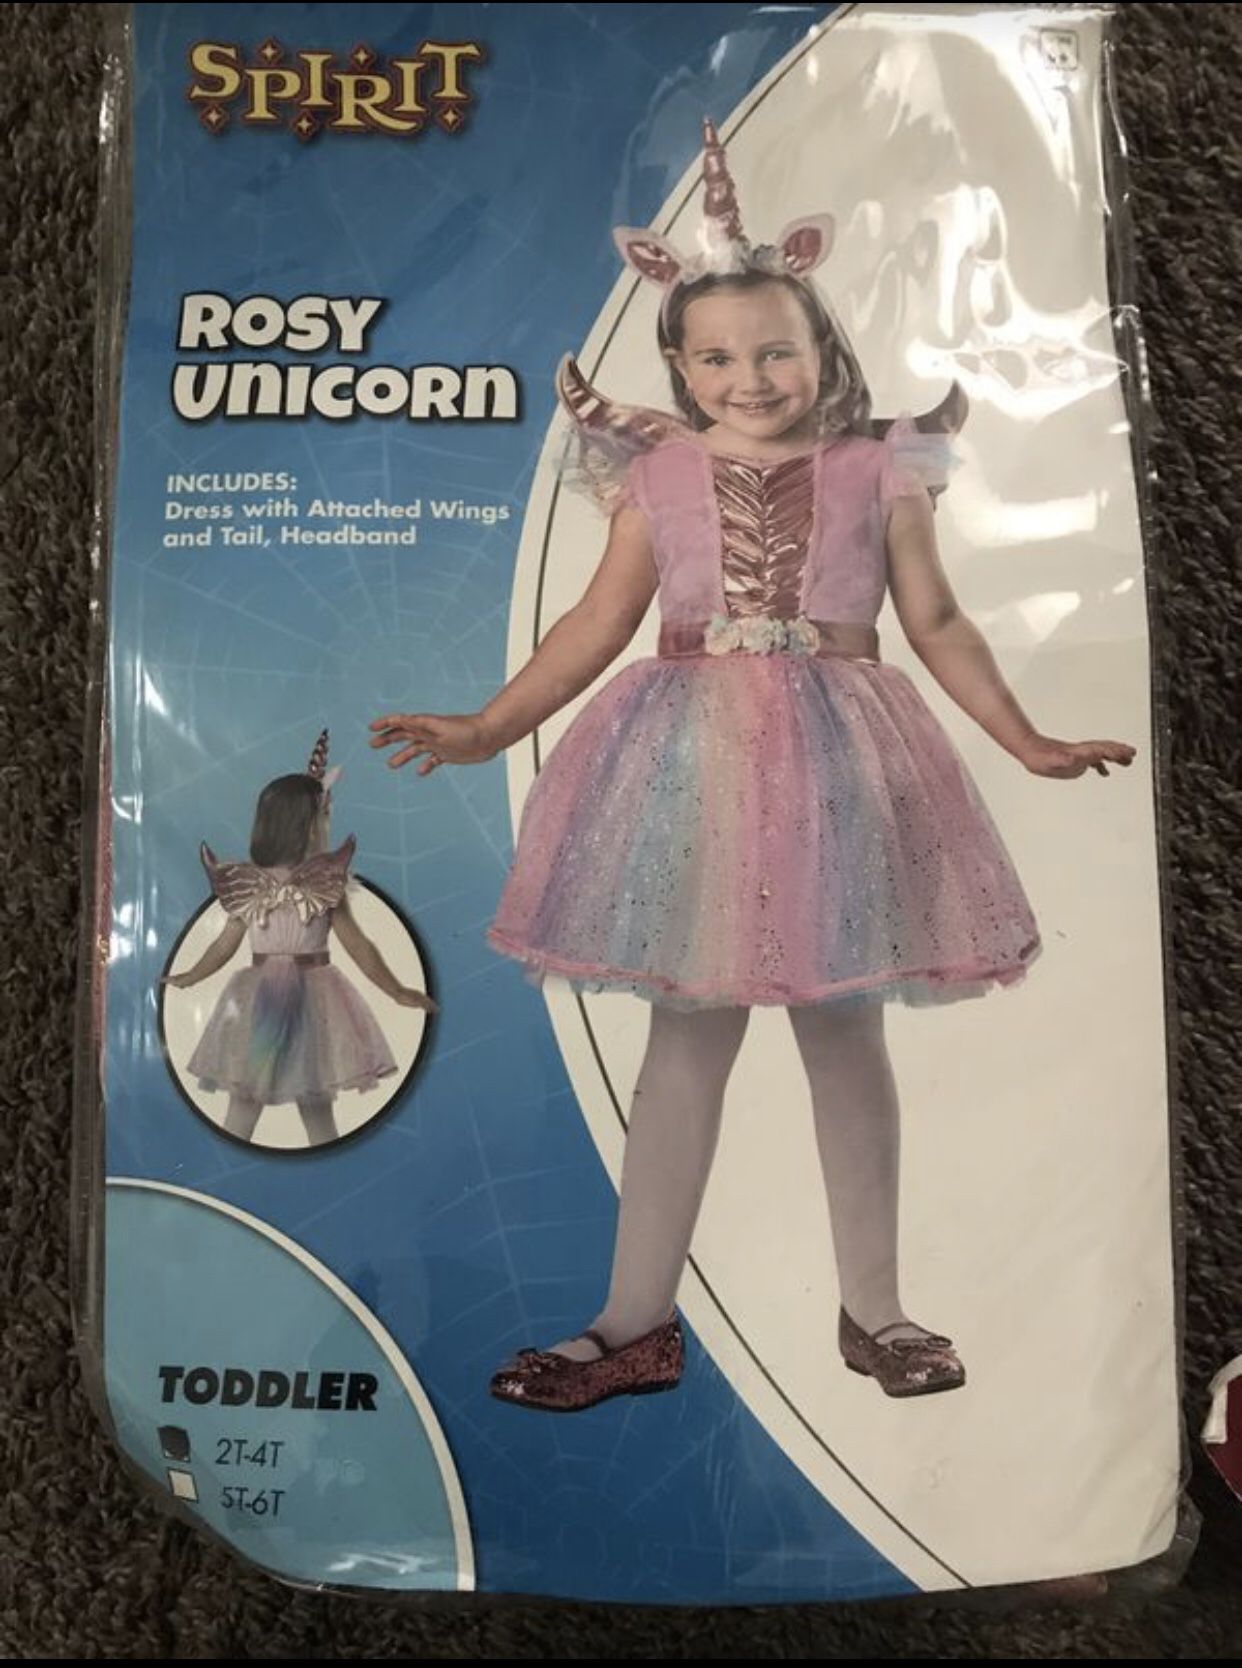 Toddler costume